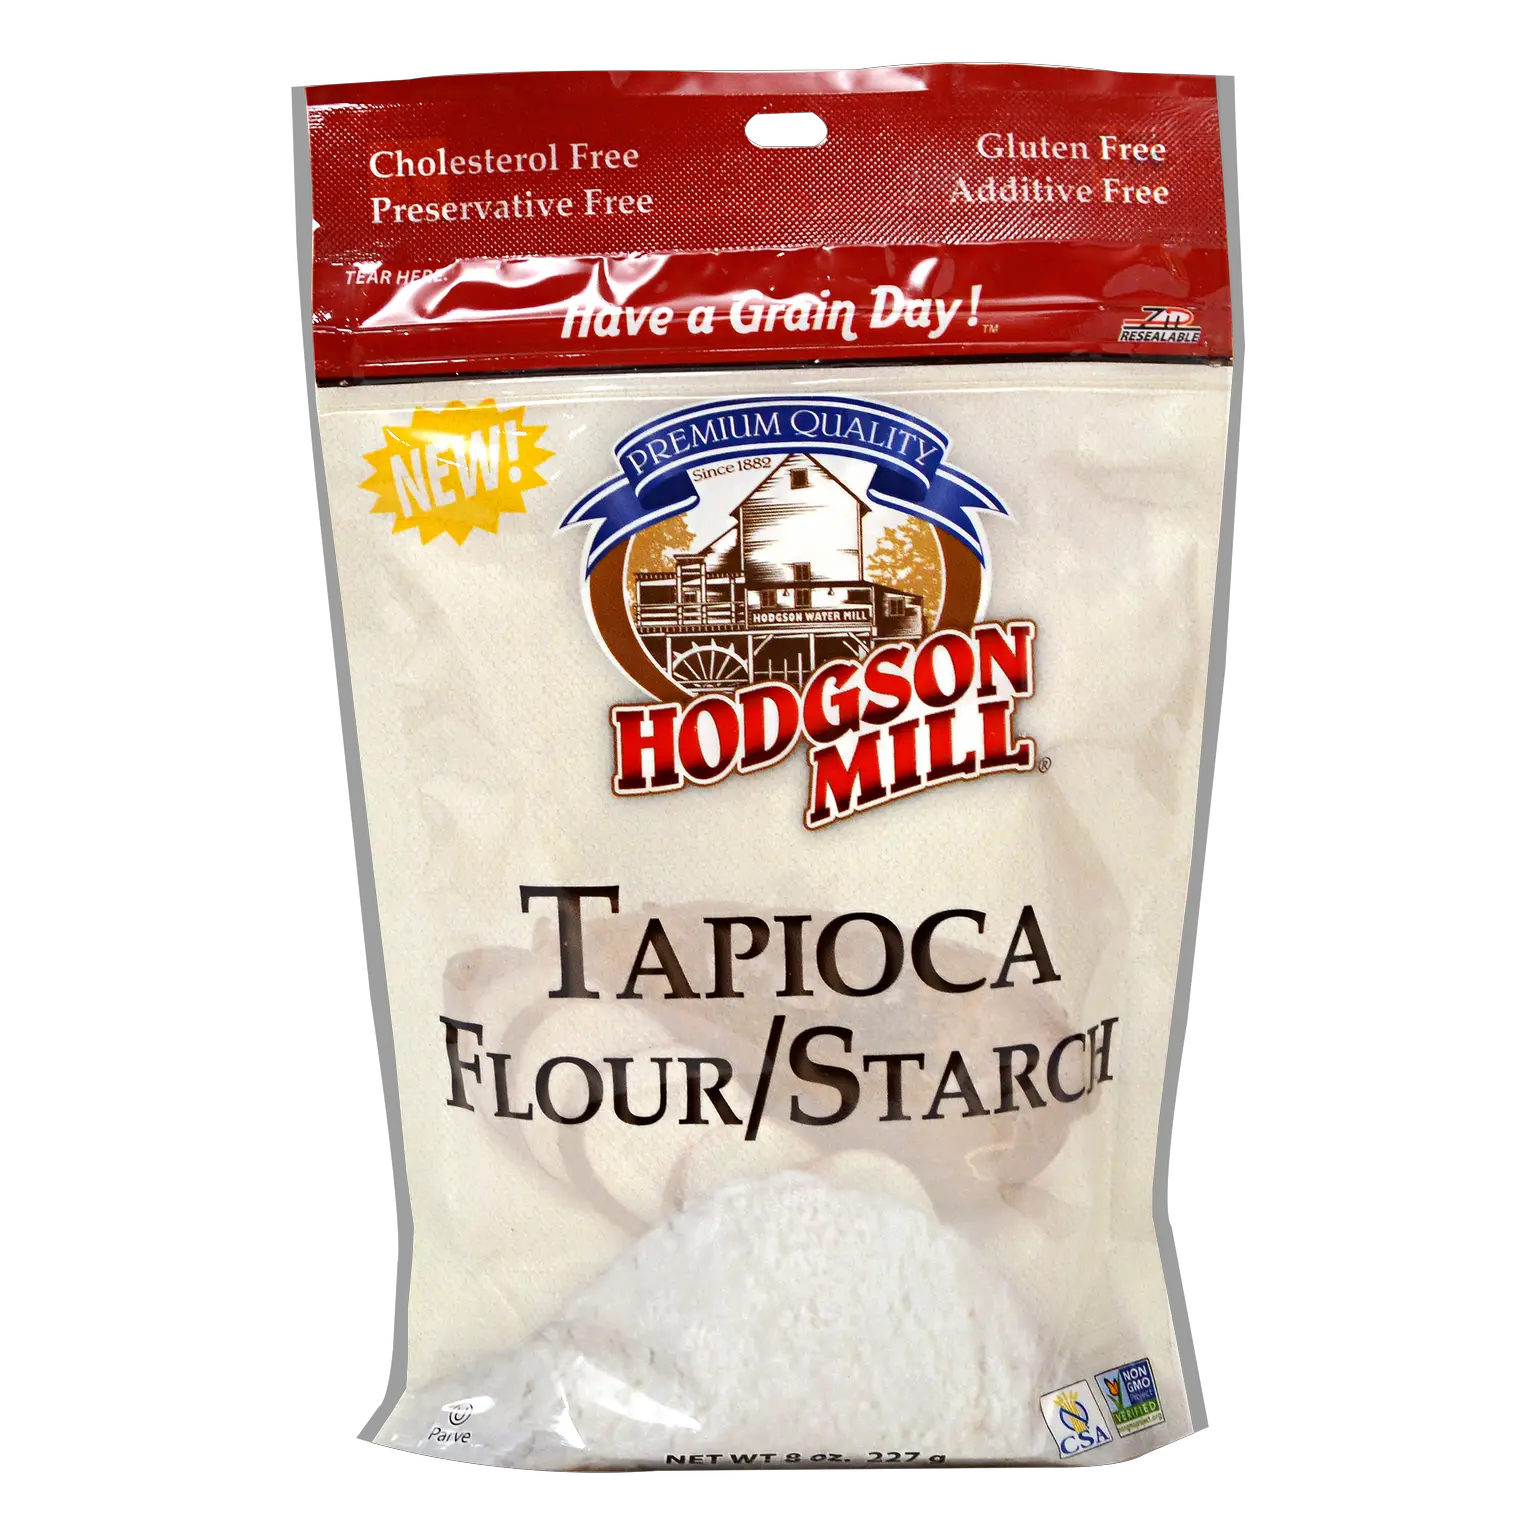 Gluten Free Tapioca Flour / Starch